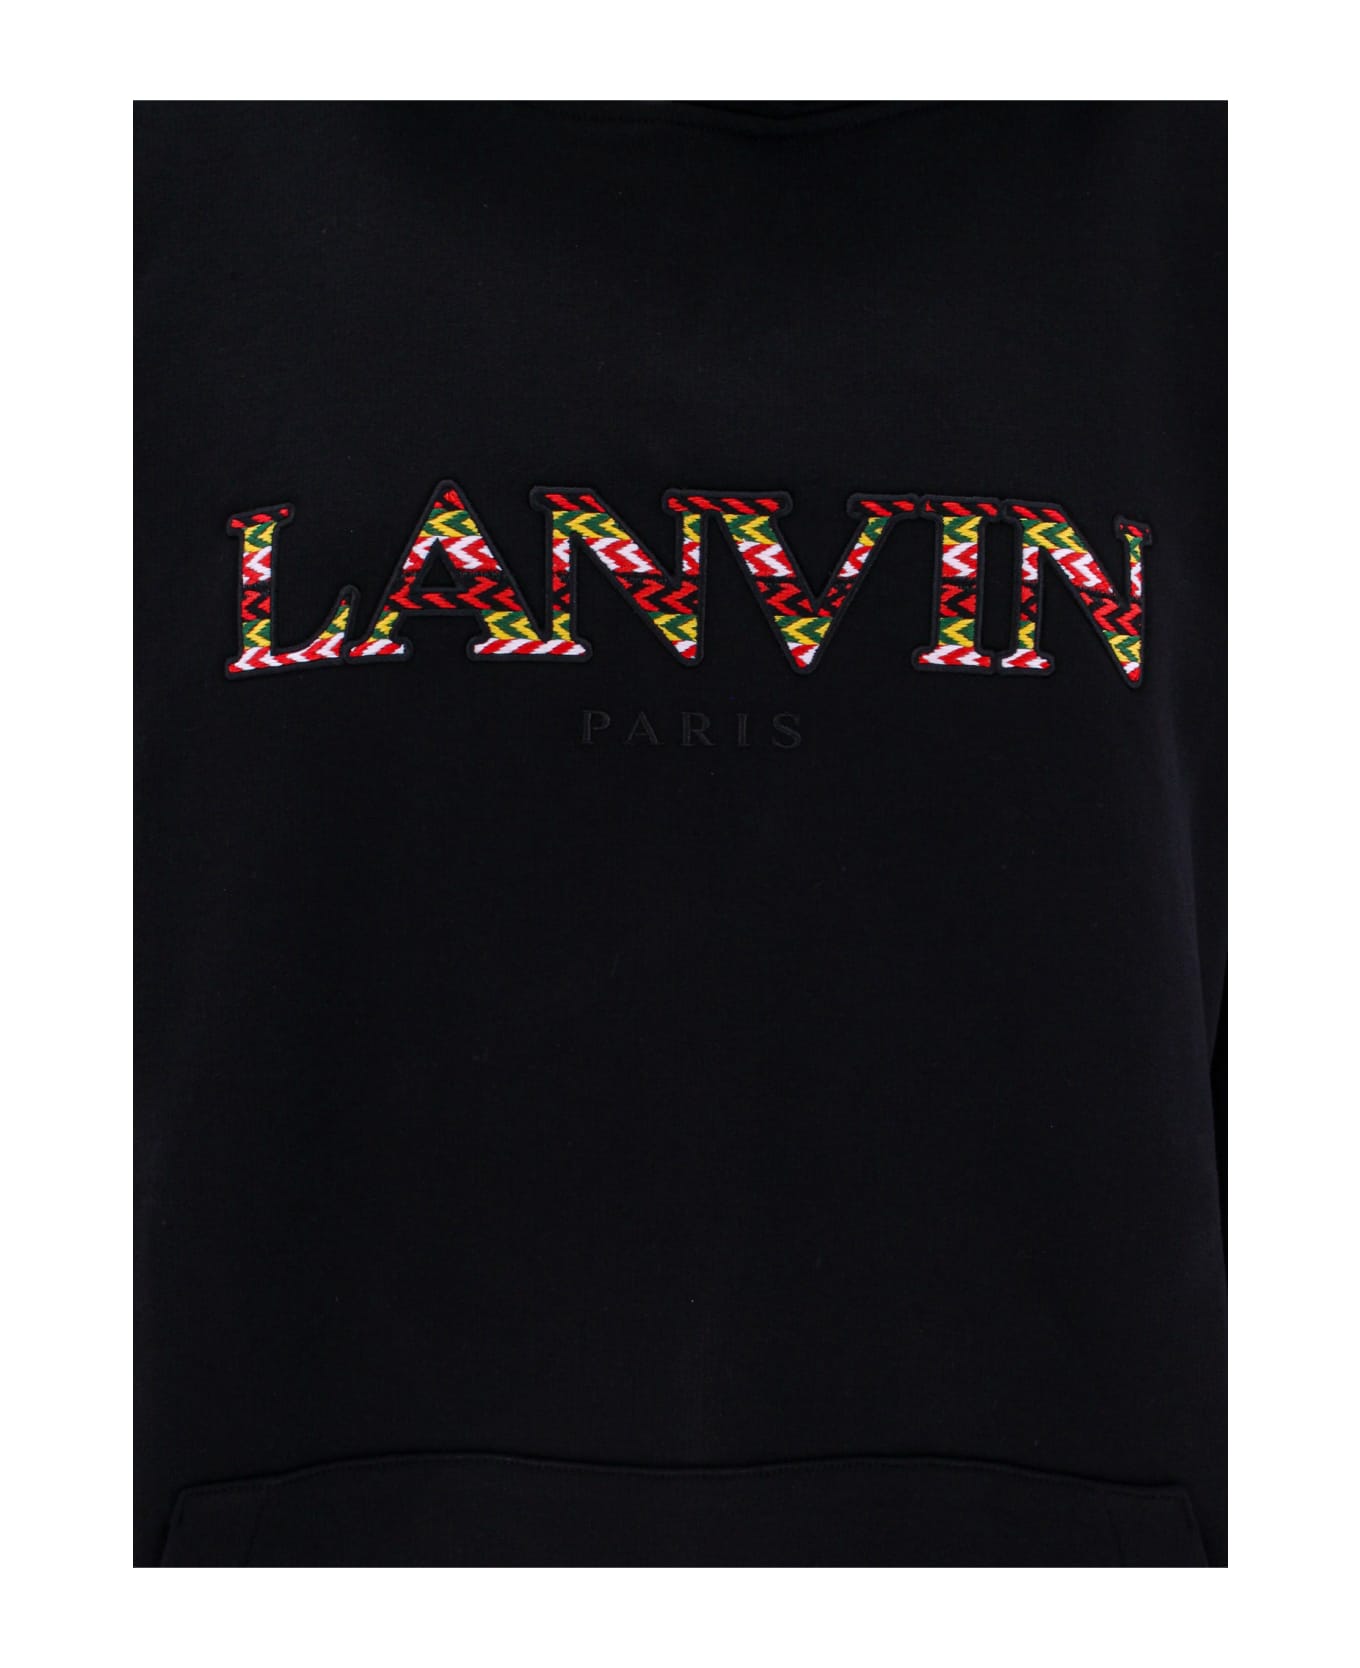 Lanvin Sweatshirt - Black フリース